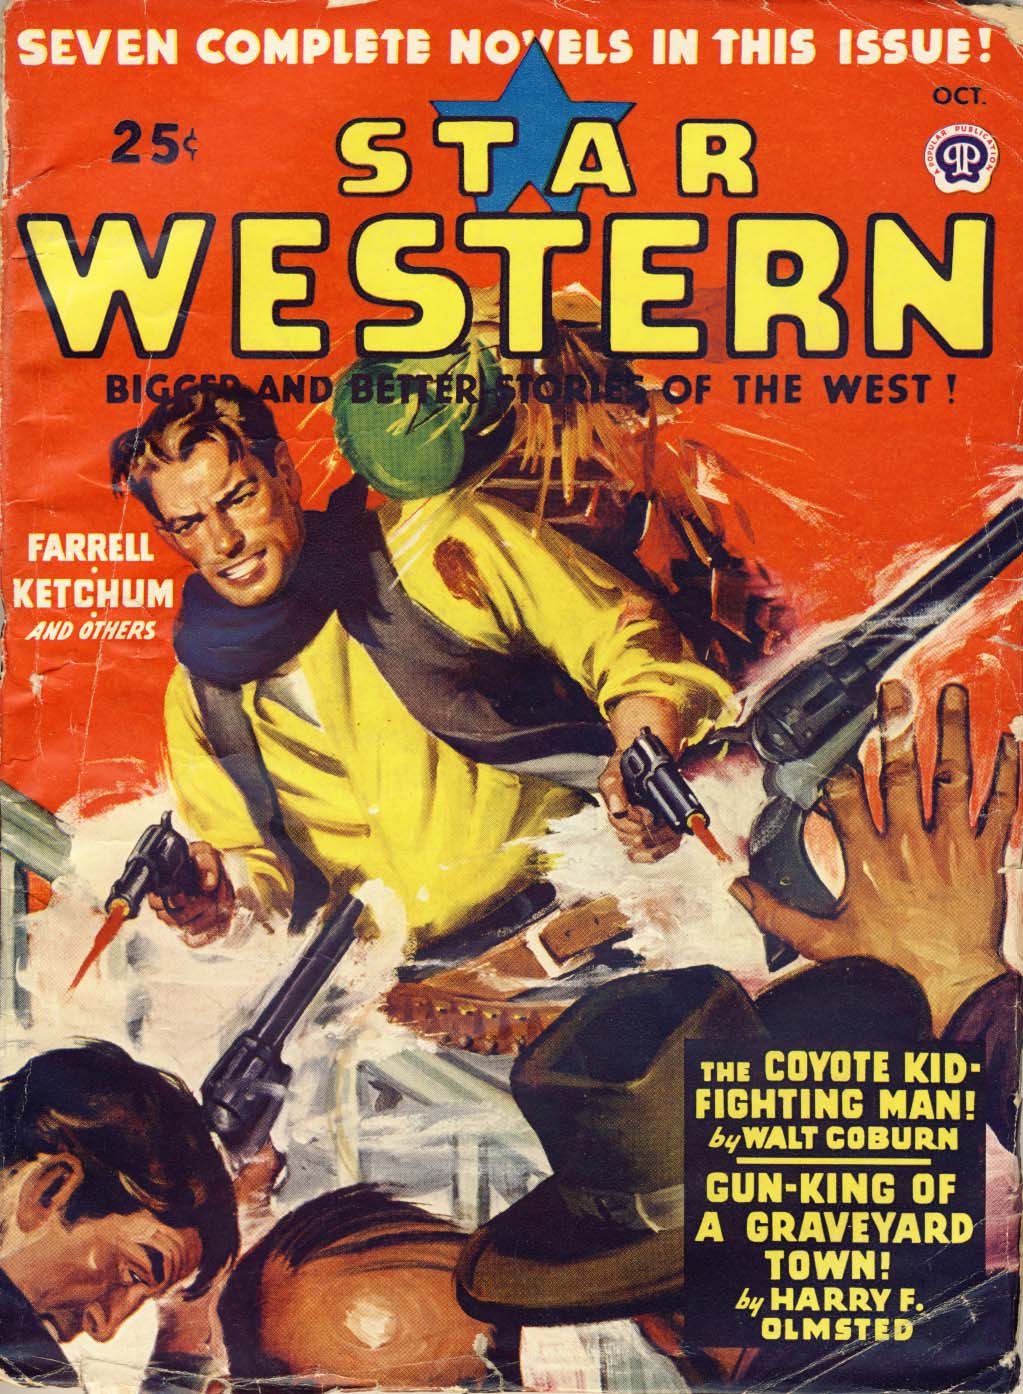 Star Western, v.40, n.1, Oct. 1946 cover